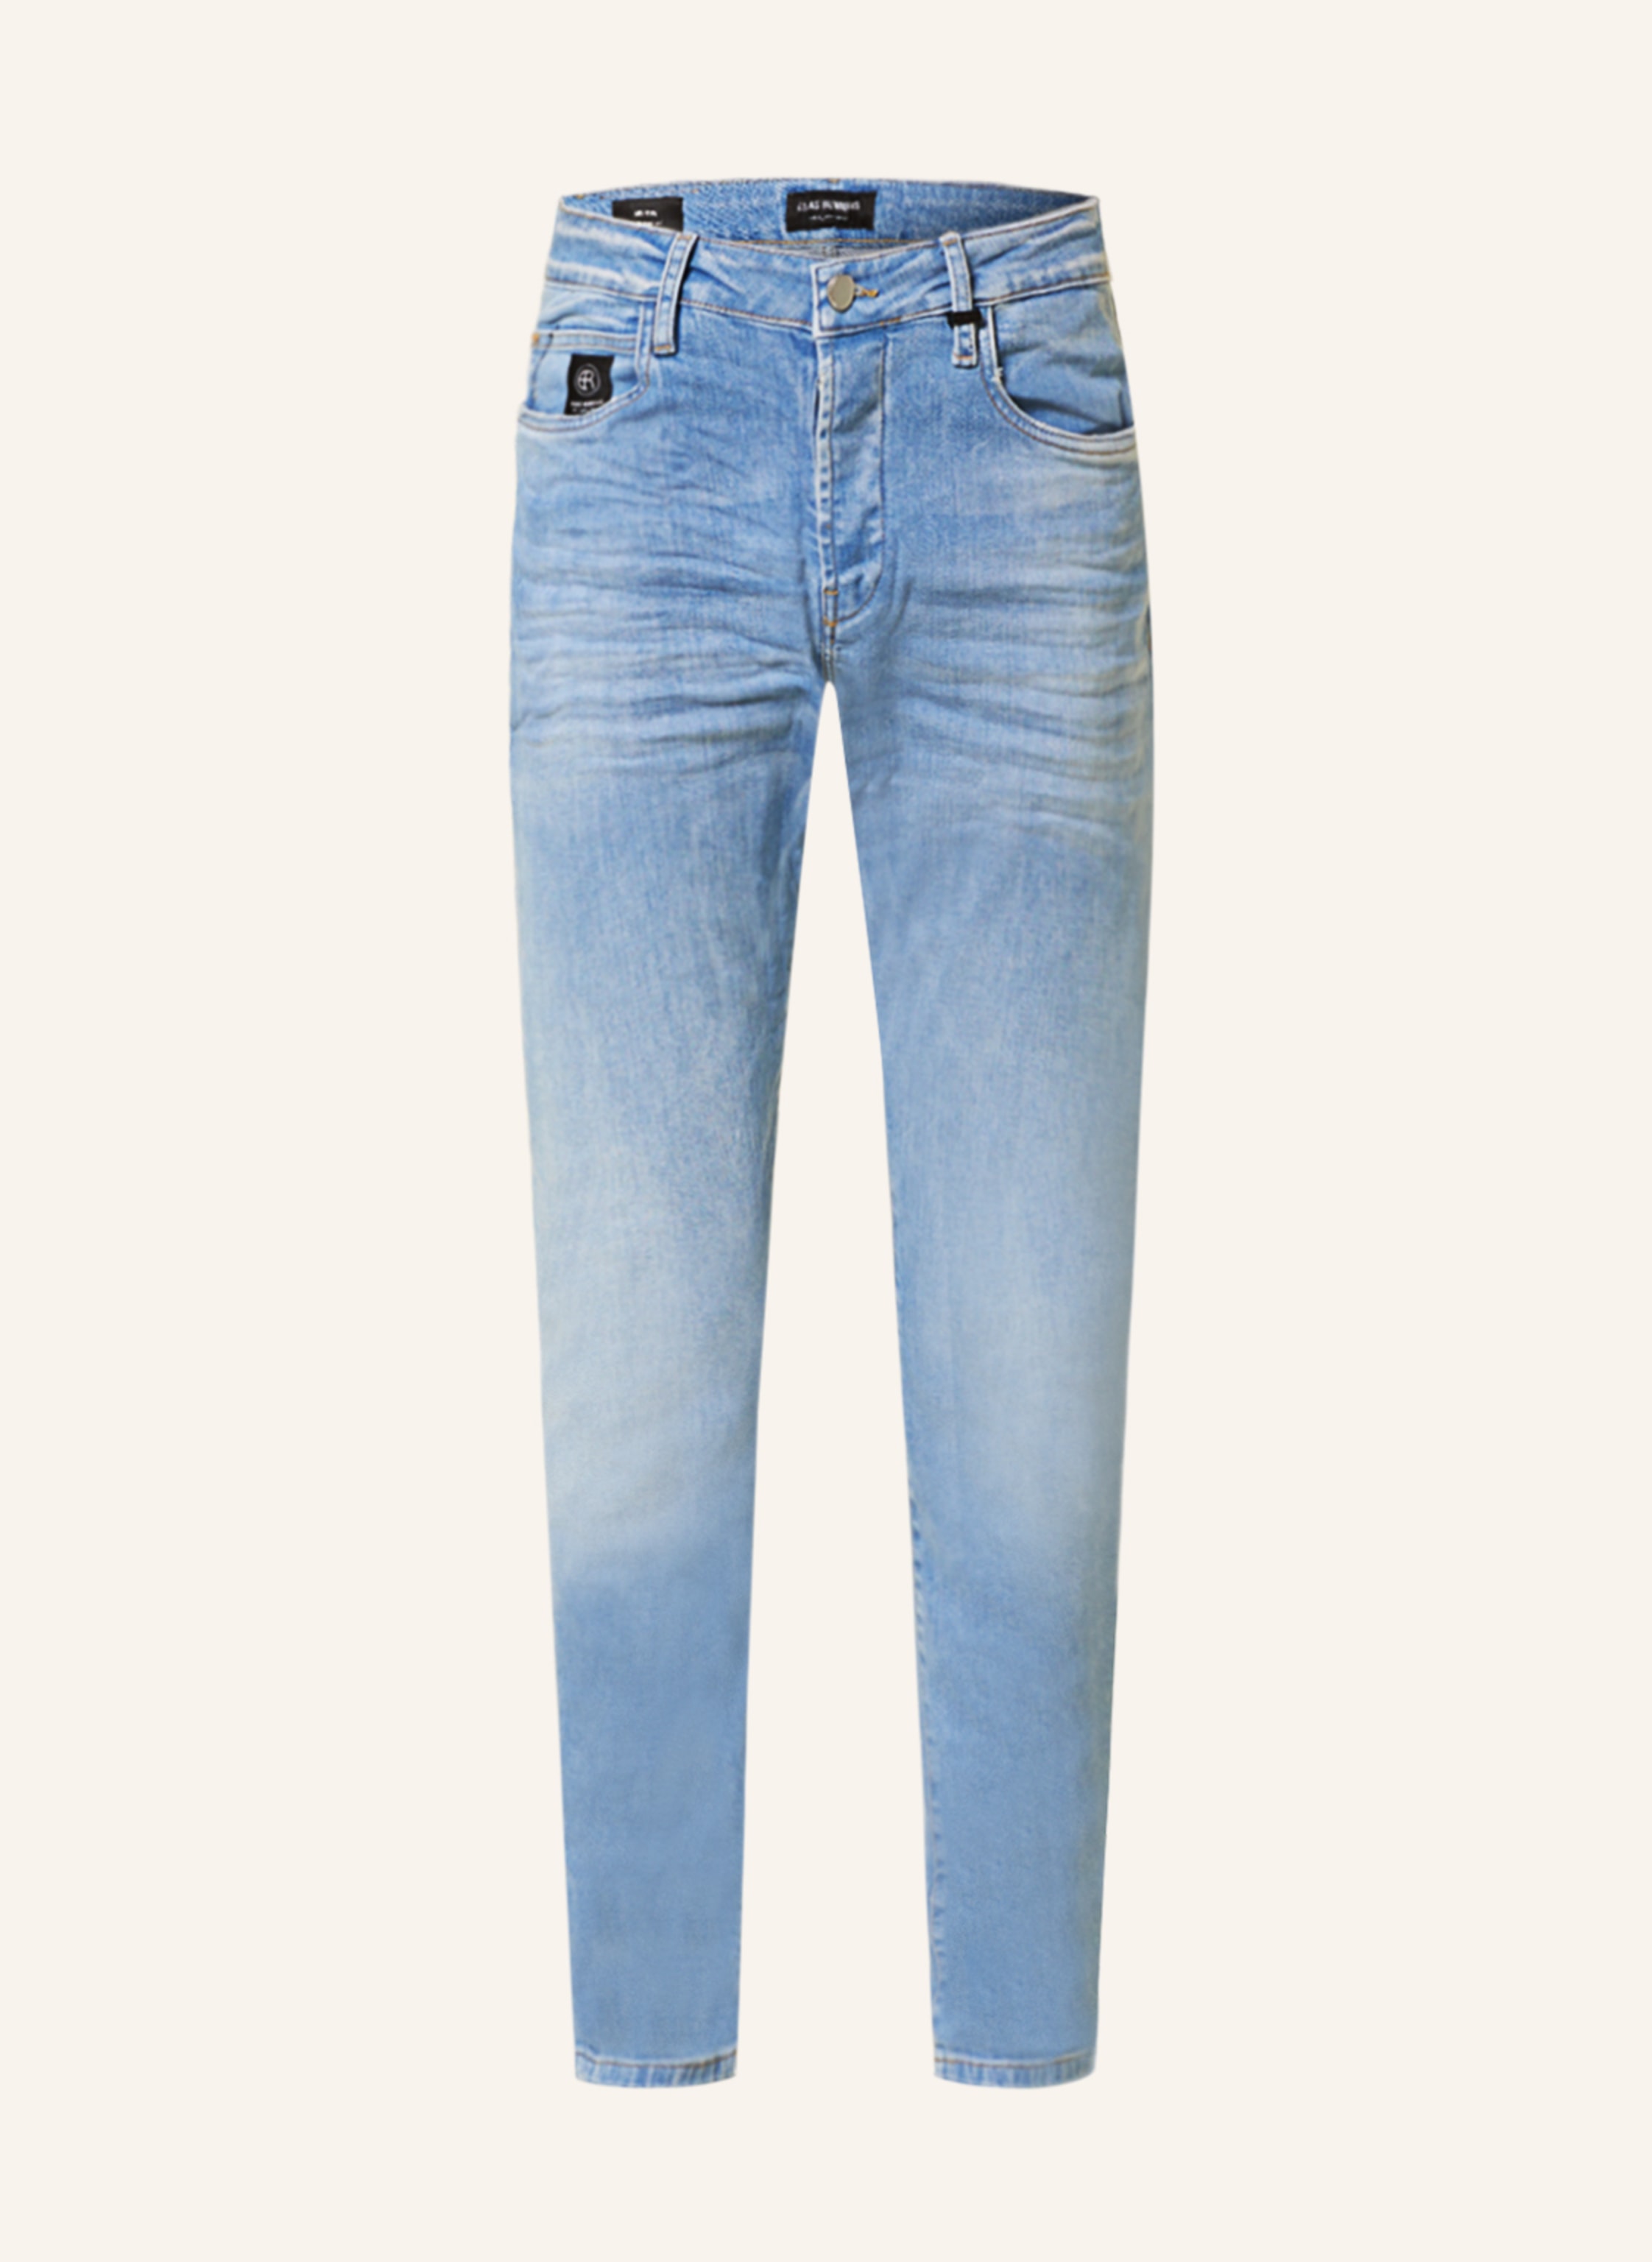 ER ELIAS RUMELIS Jeans DAVE Tapered Fit in 568 berry blue | Sommerkleider